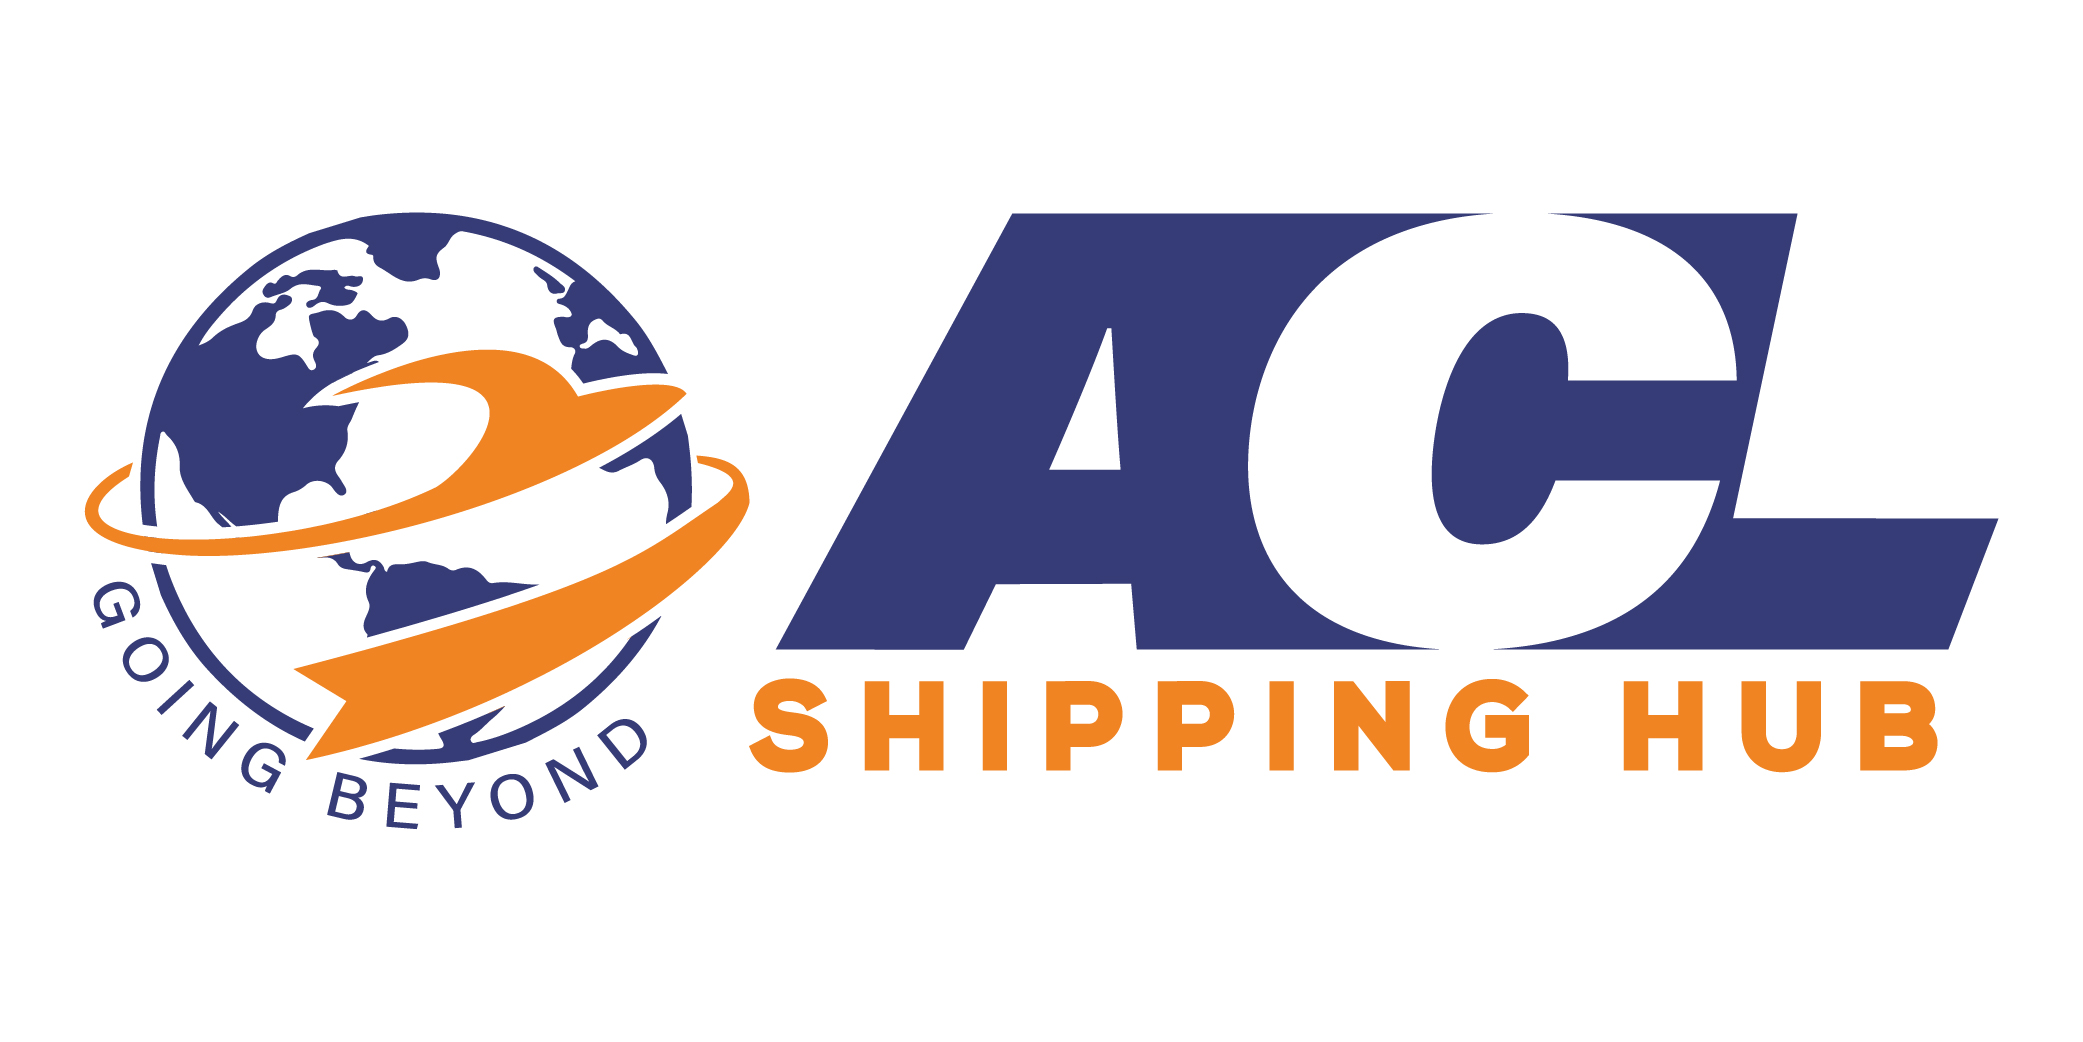 ACL SHIPPINGHUB